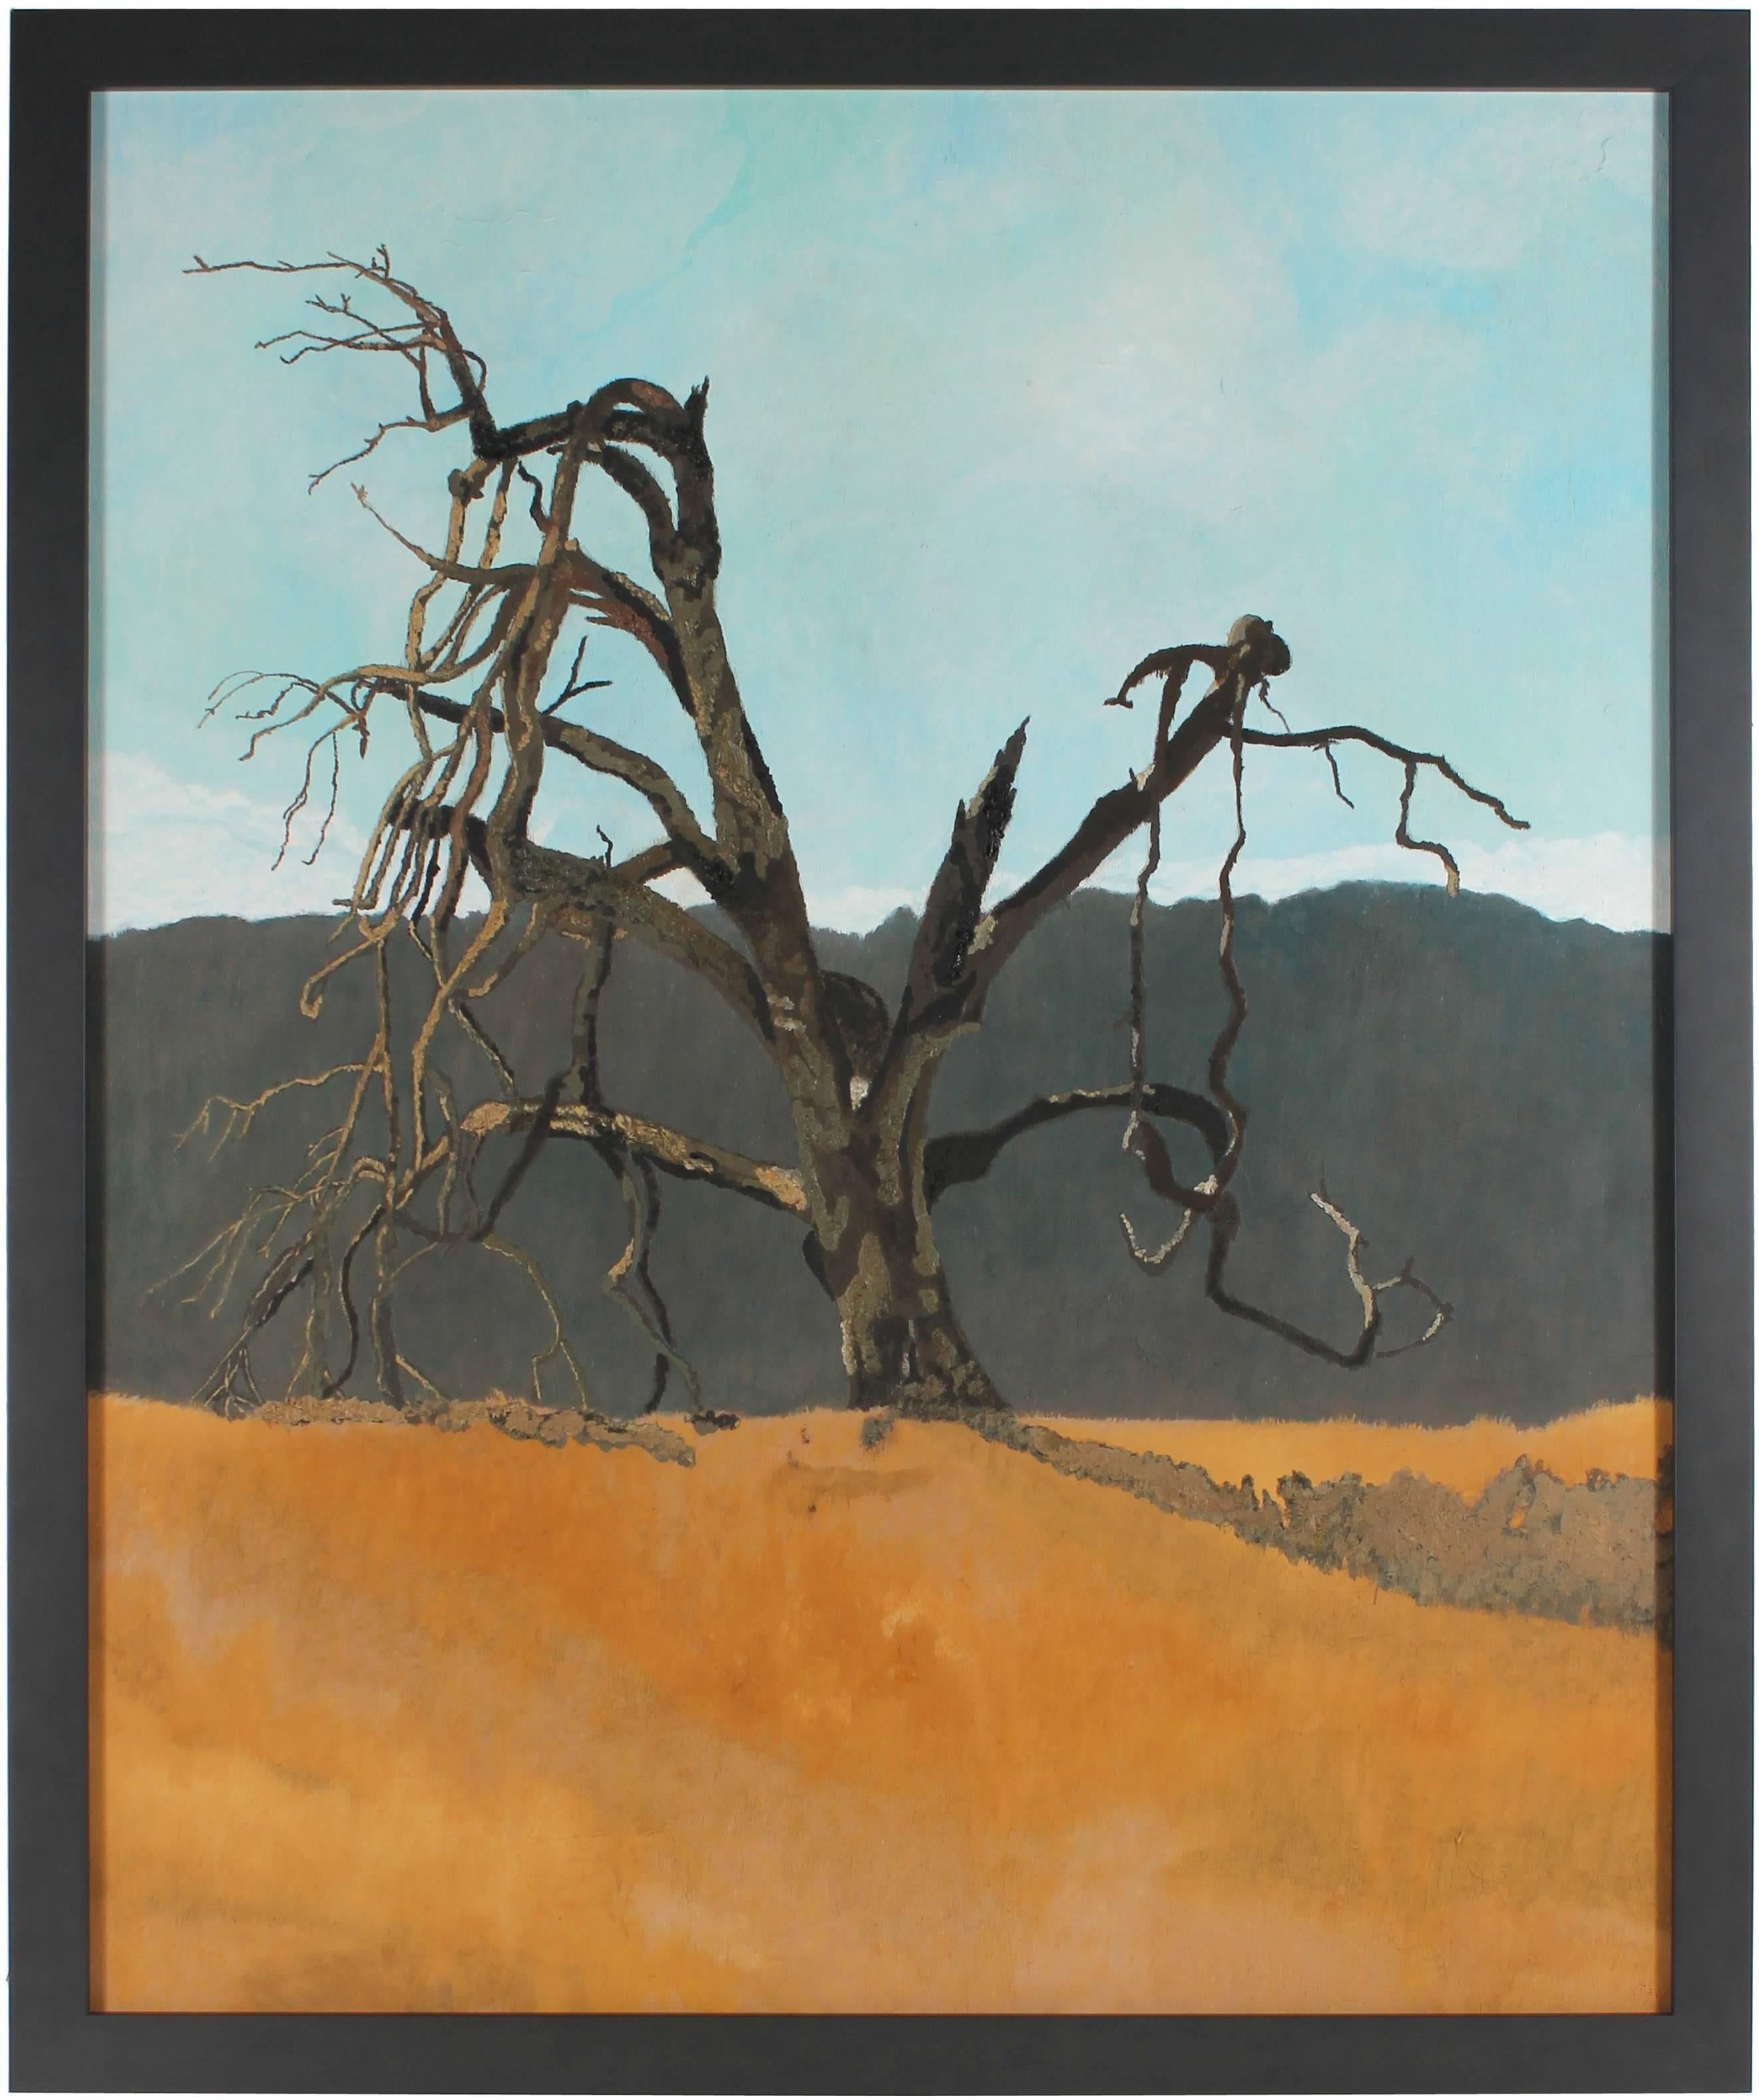 Gaétan Caron Abstract Painting - "Le Vieux Chêne" (Ancient Blue Oak), Northern California Landscape, in Oil